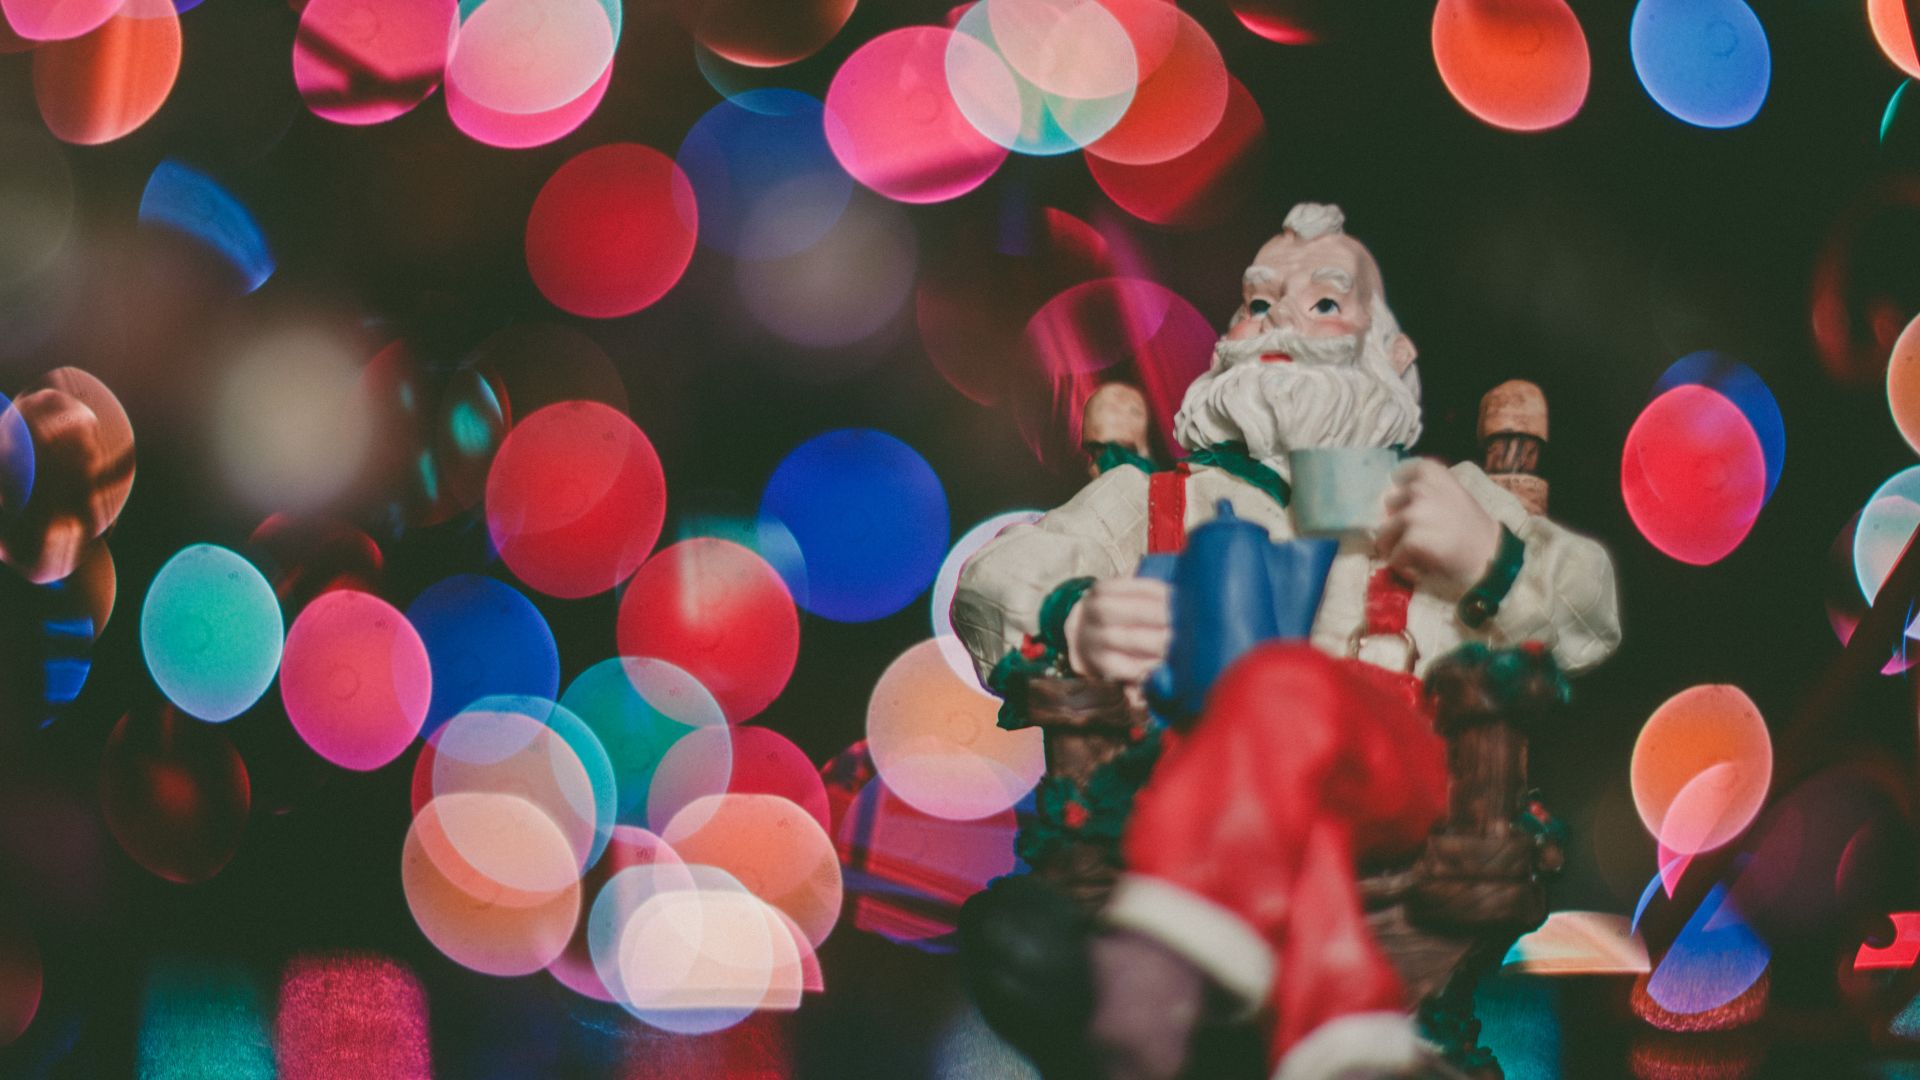 Wallpaper Santa Claus toy and bokeh Christmas lights